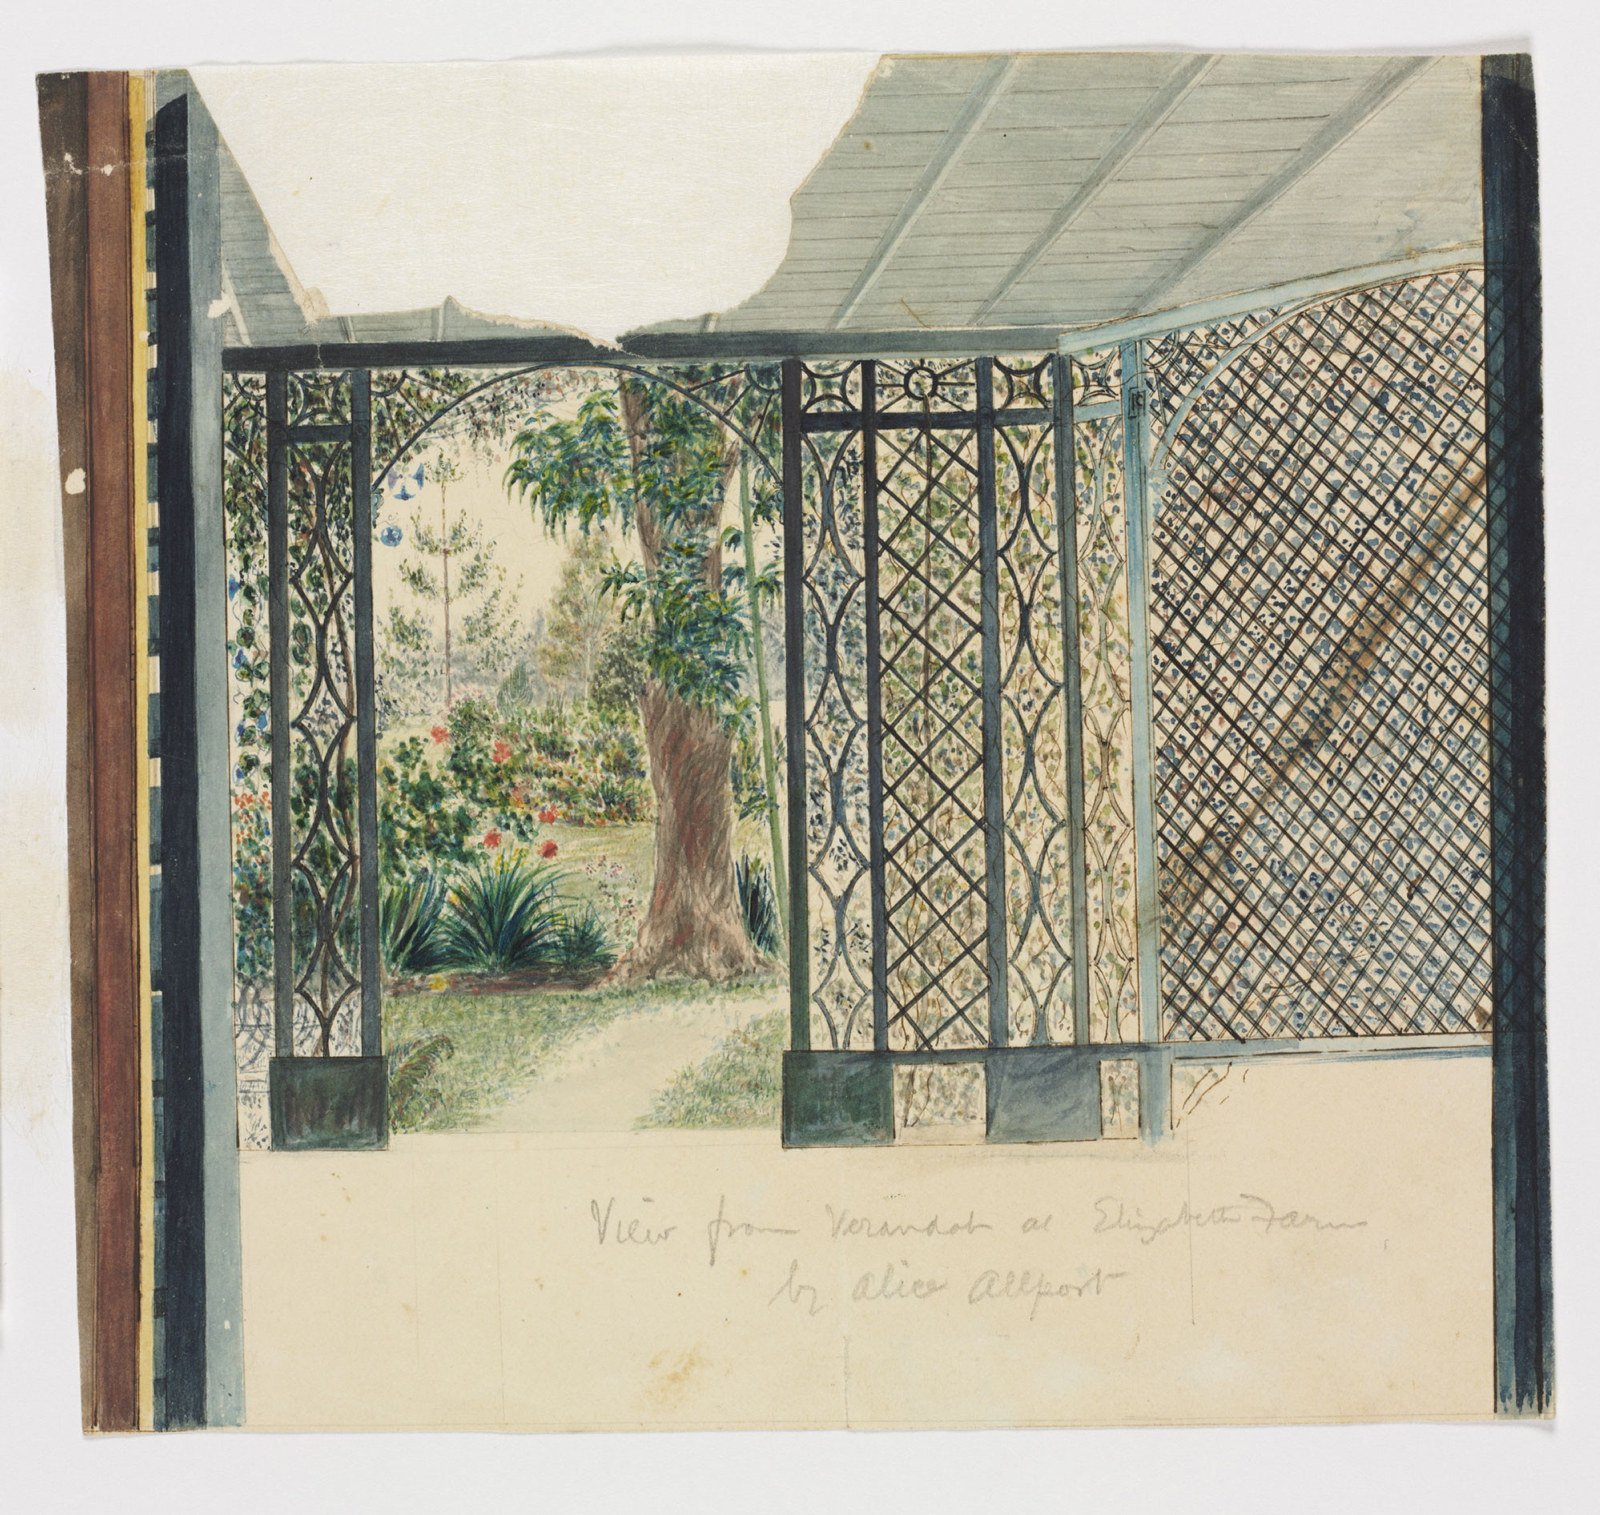 Illustrated view of garden through ornate trellis work.